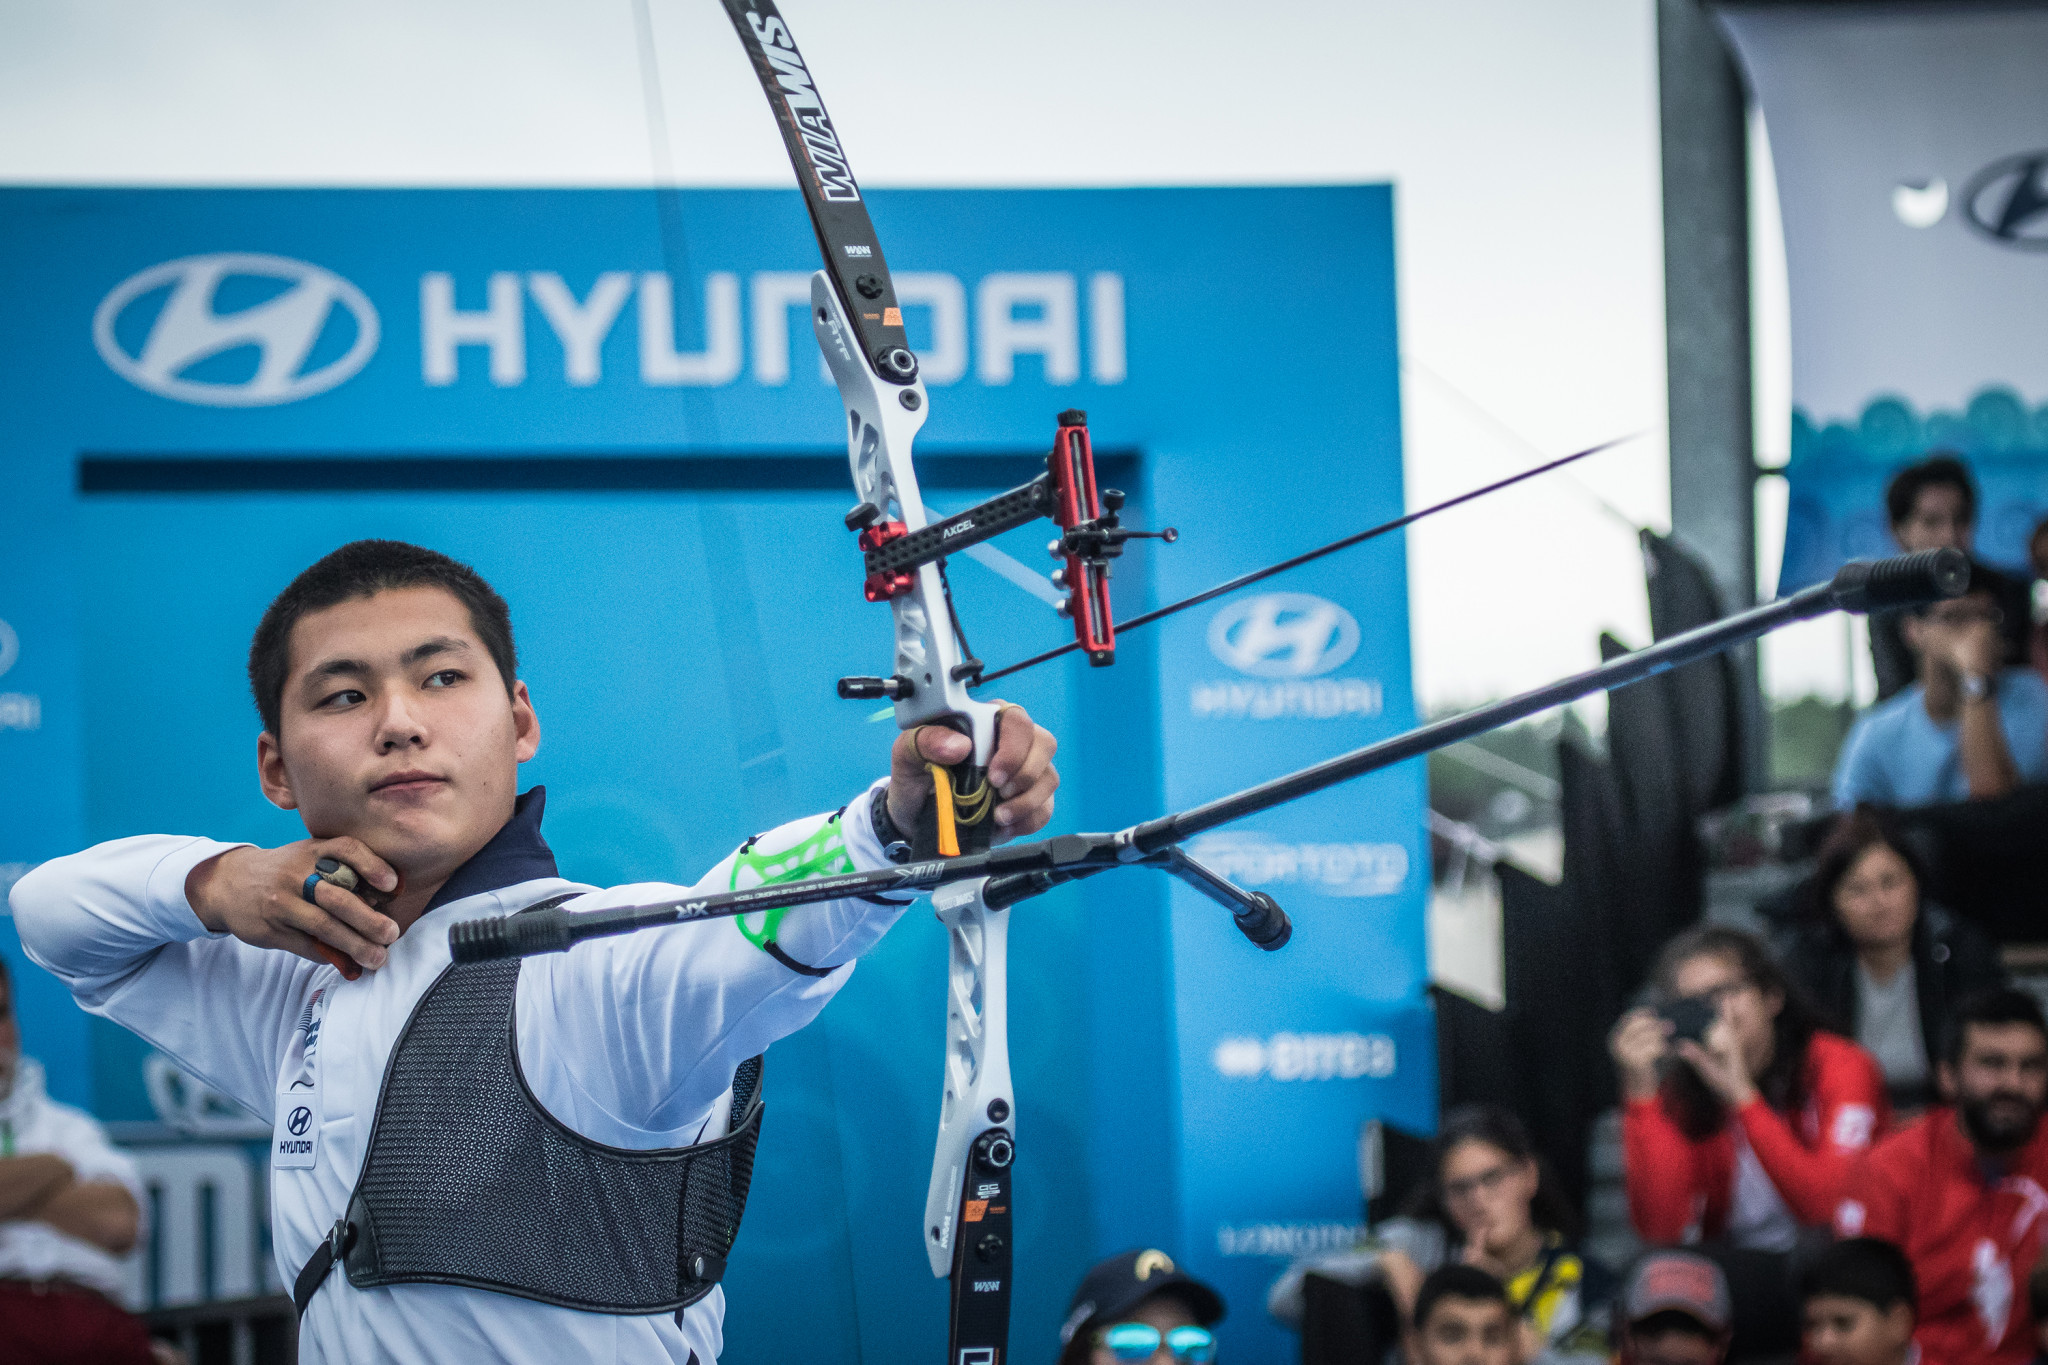 Hyundai and World Archery extend partnership until 2021